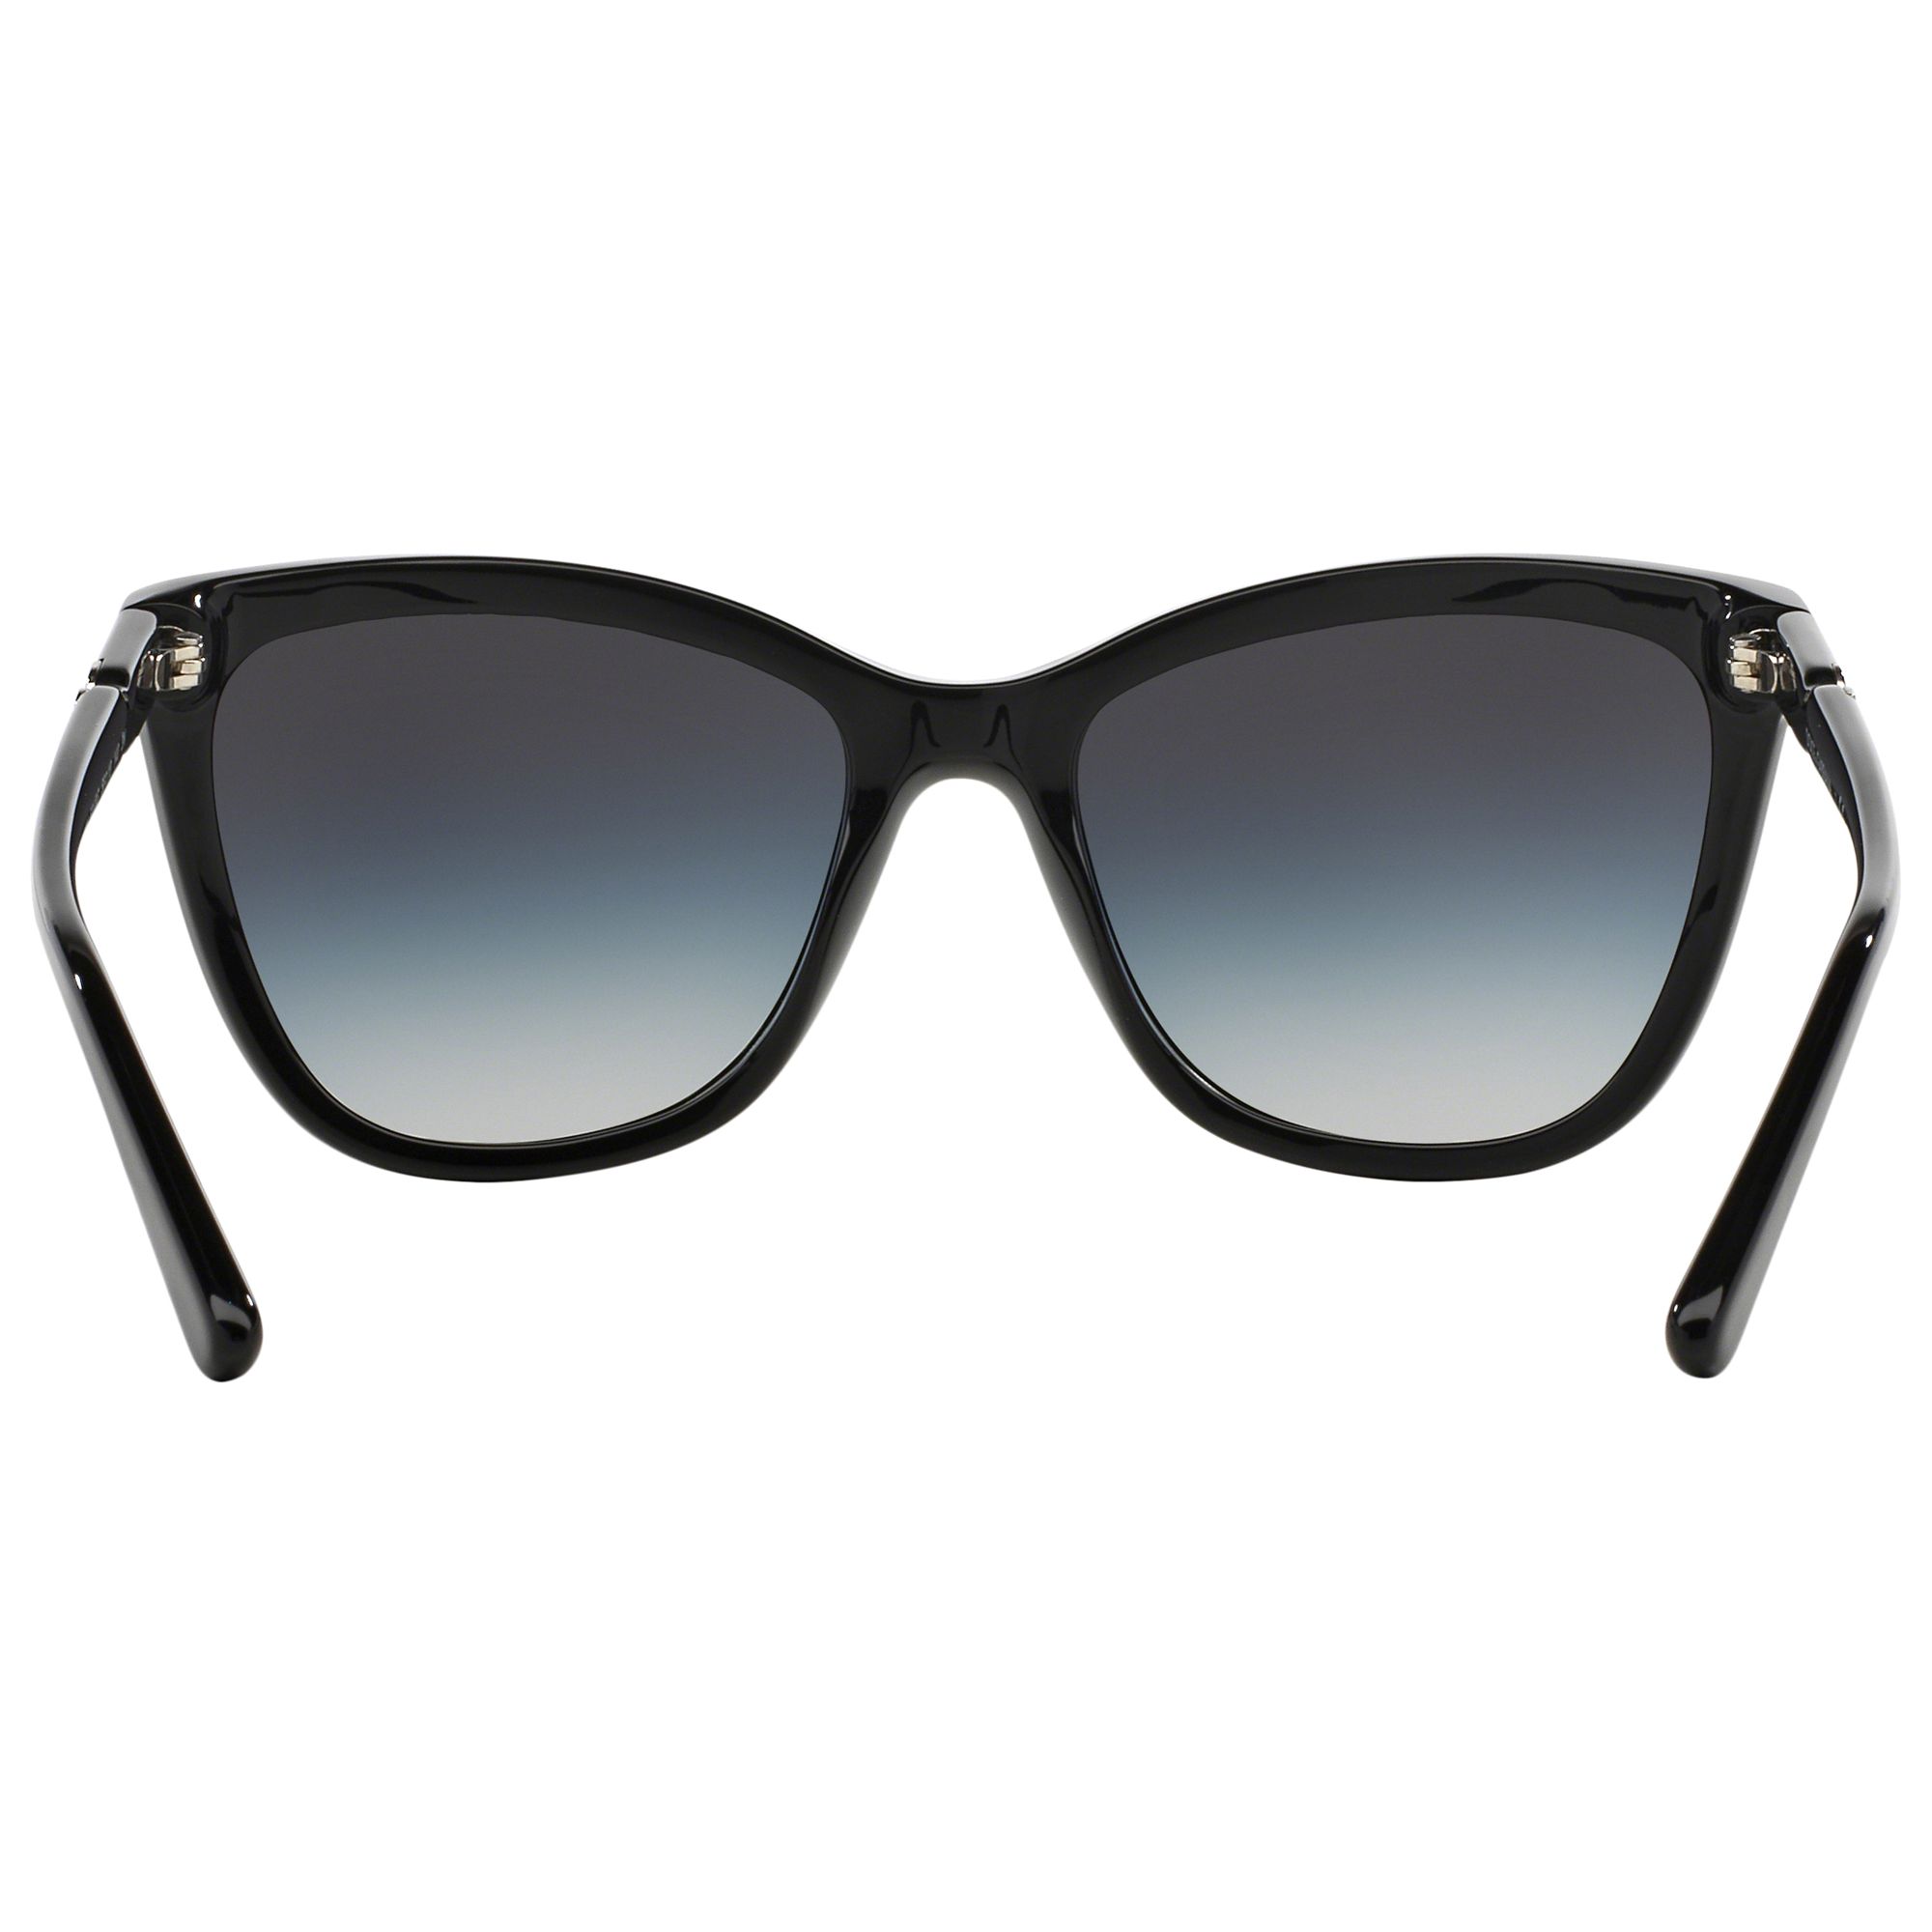 Dolce & Gabbana DG4193 Cat's Eye Sunglasses, Black at John Lewis & Partners